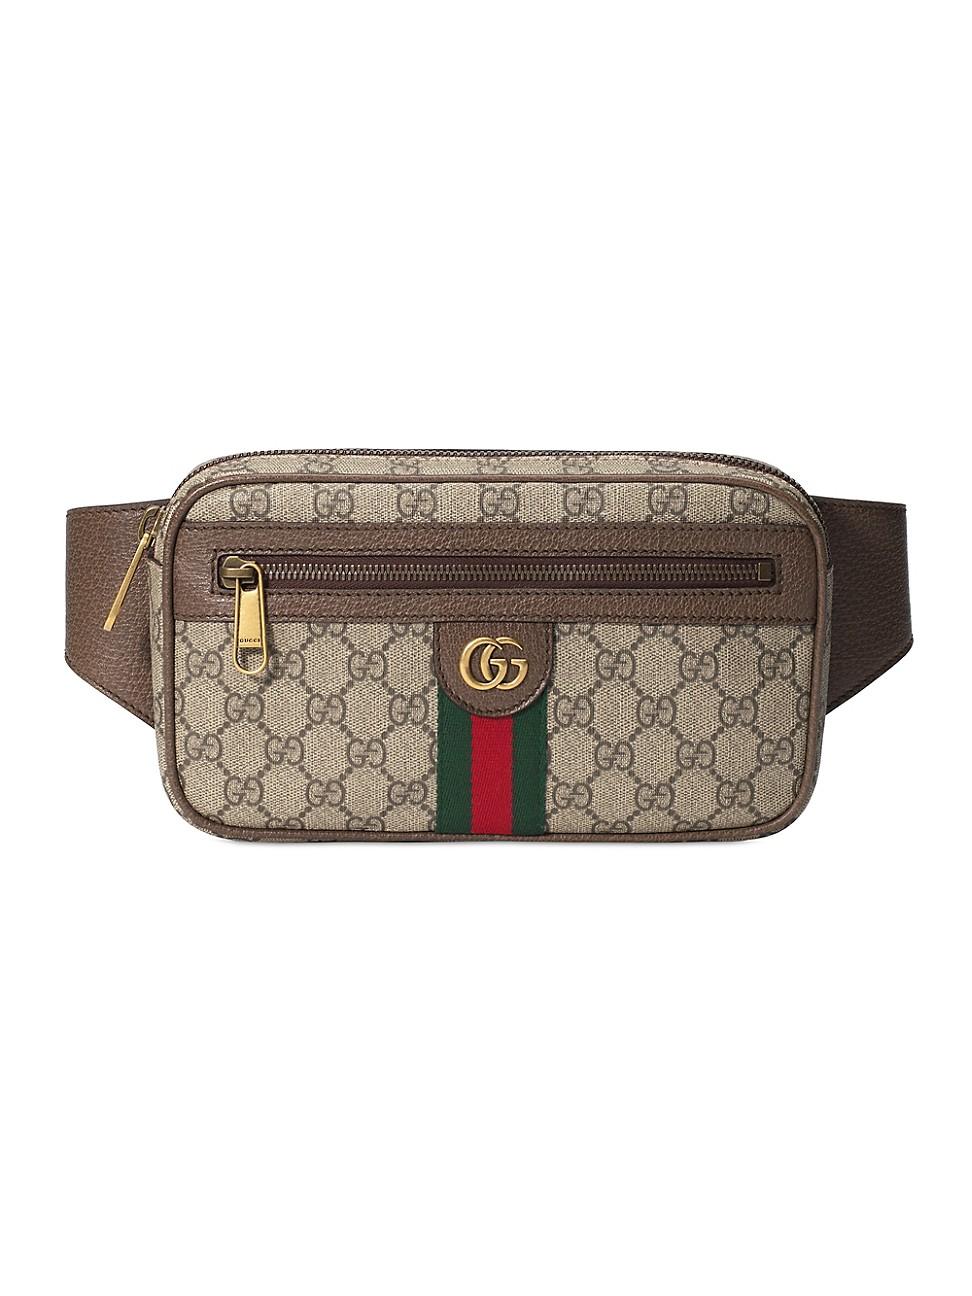 Gucci Ophidia GG Supreme Canvas Belt Bag in Natural for Men | Lyst